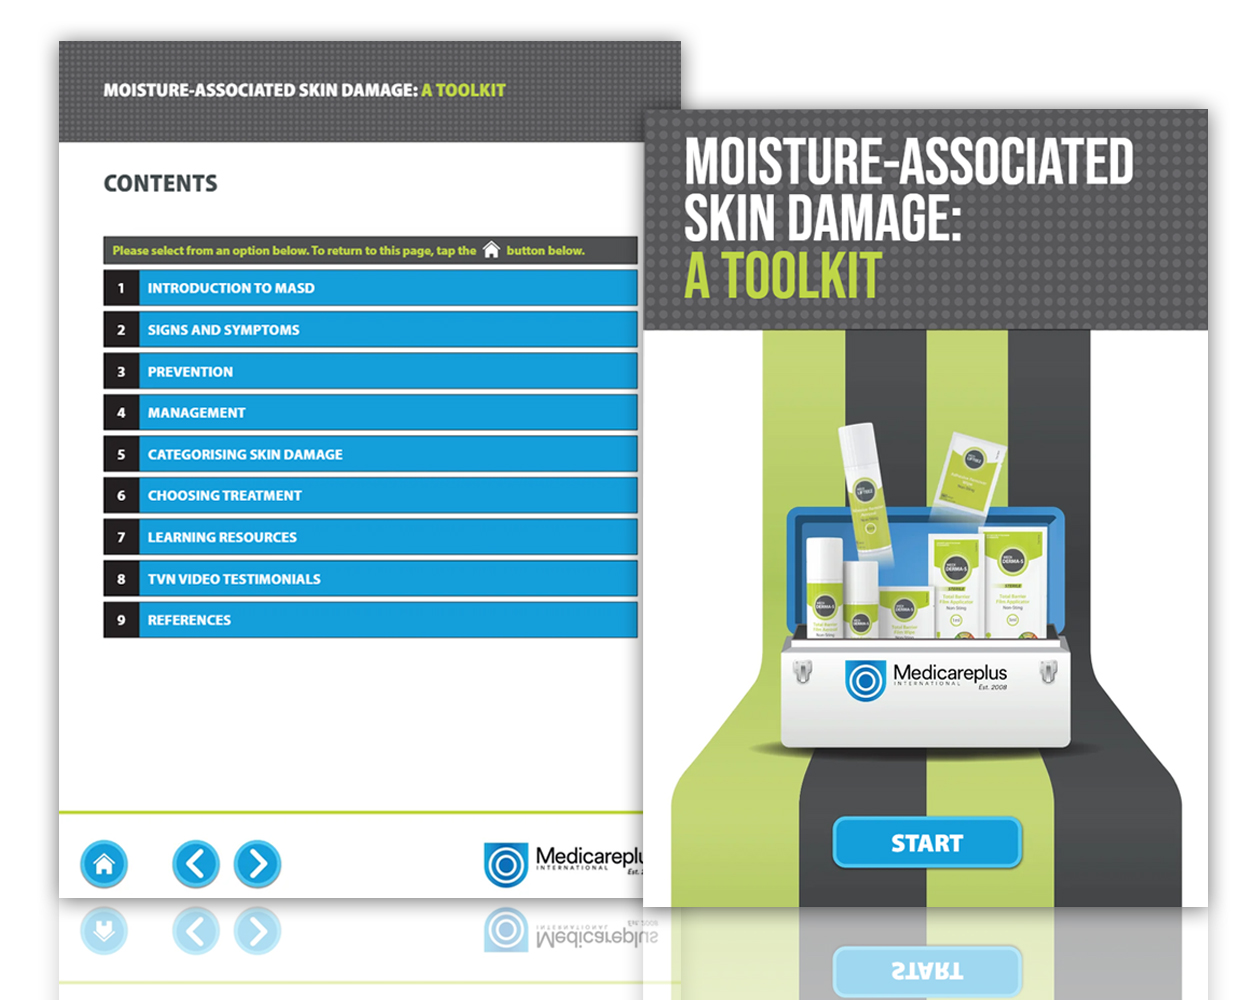 Moisture-Associated Skin Damage: A Toolkit